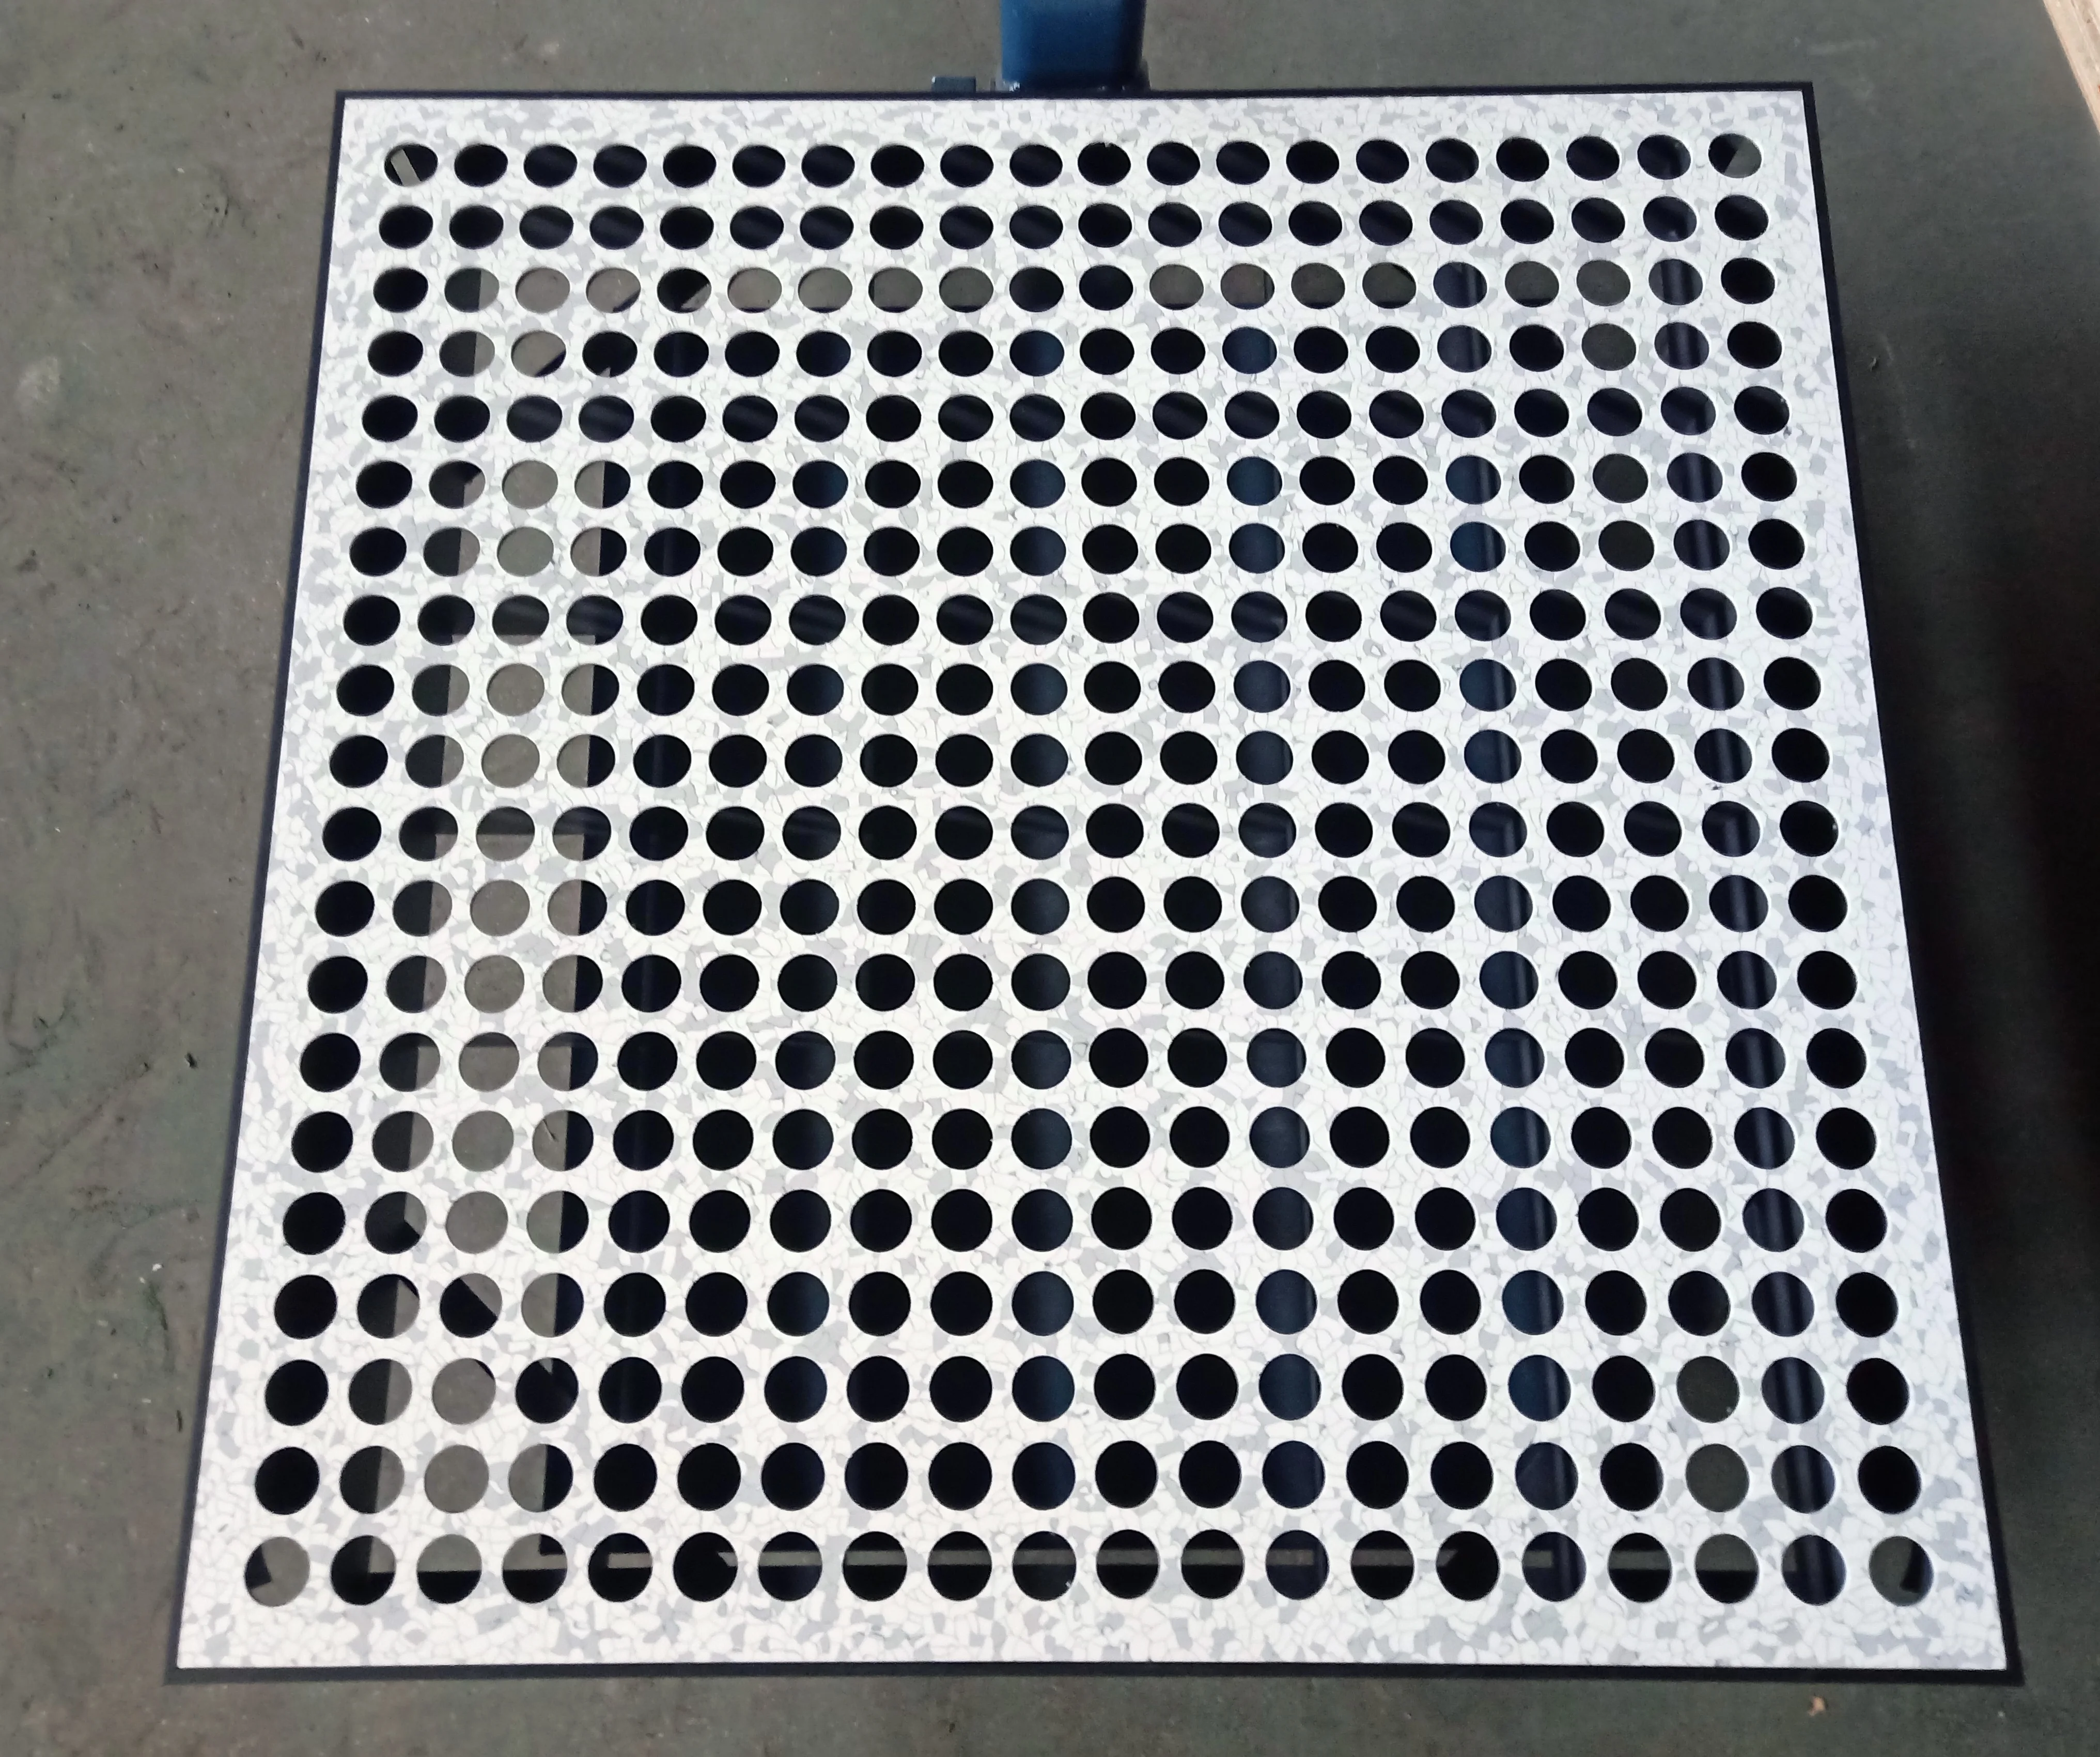 air flow perforated floors ventilation floor grilles perforated false sterile floor air distribution system Electrostatics